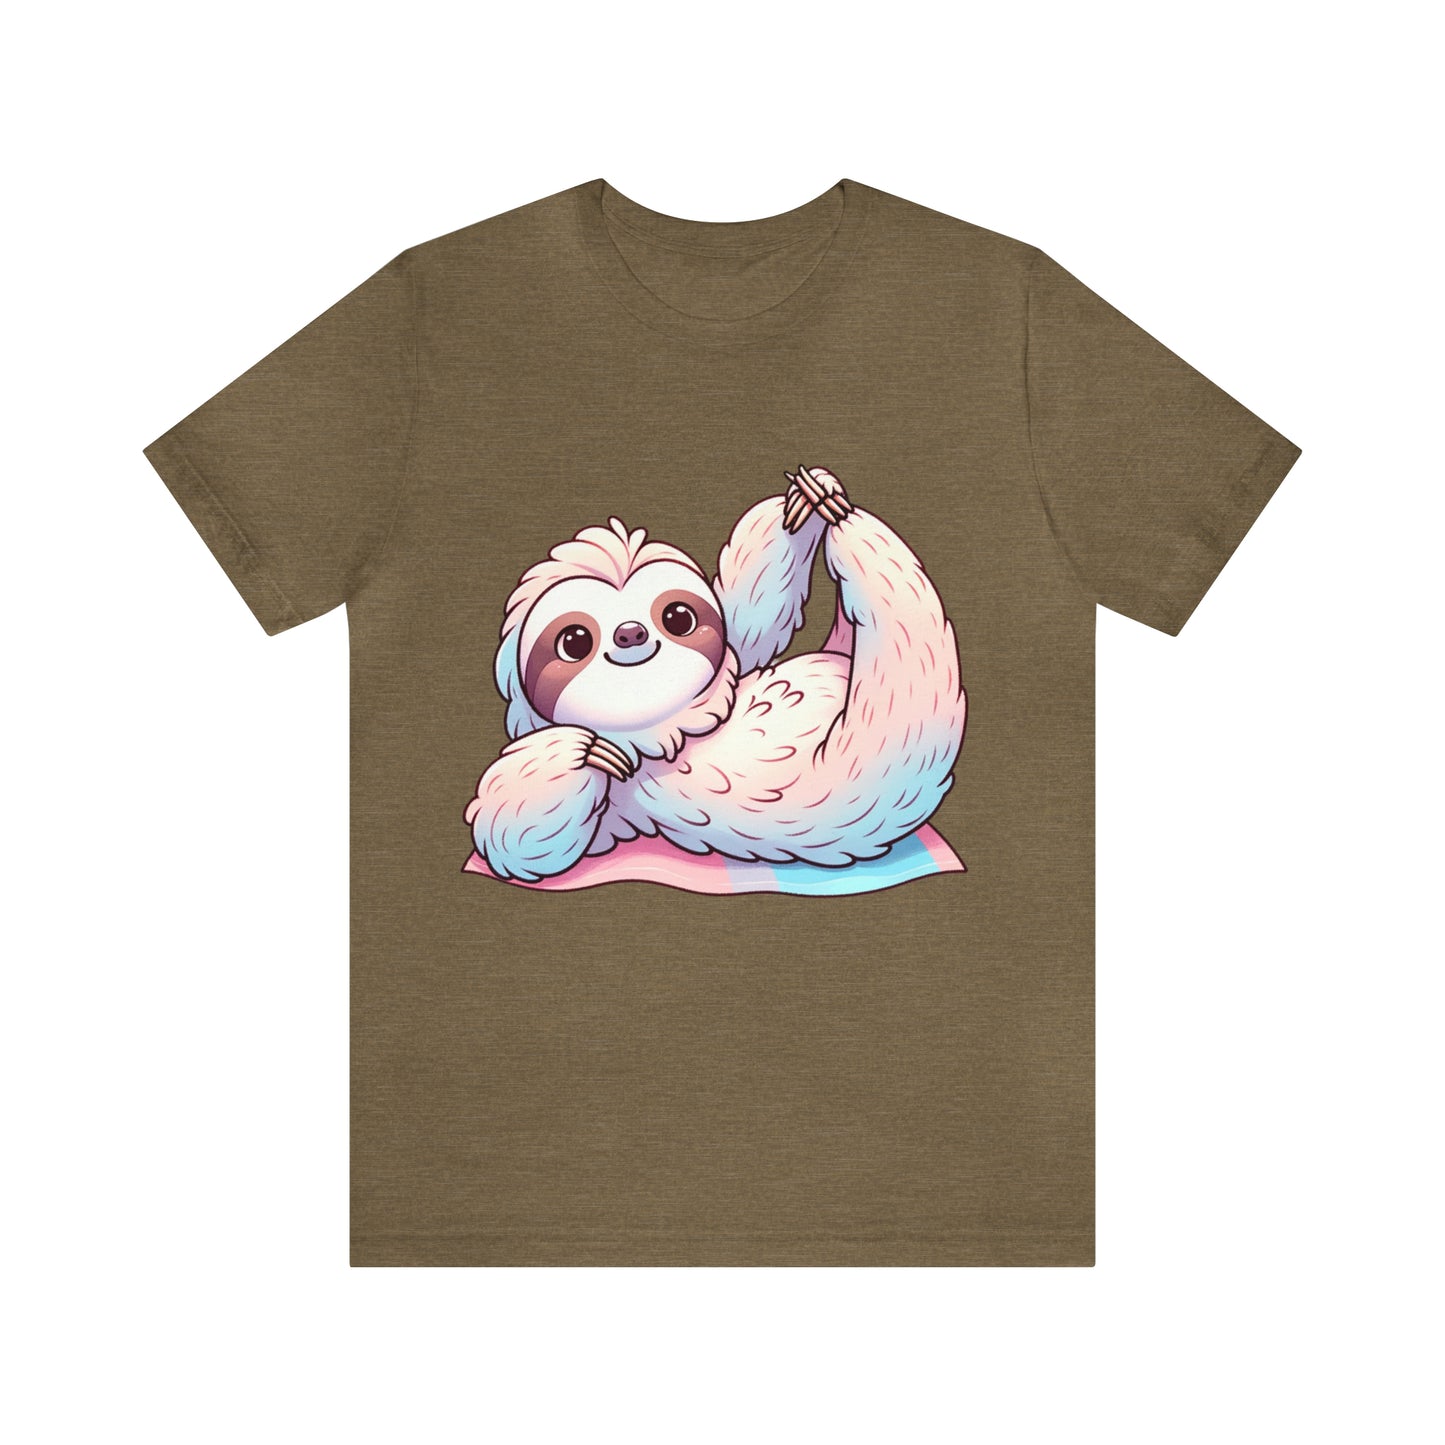 Sloth Yoga T-Shirt, Yoga Shirt, Yoga Tee, Funny Yoga Shirt, Sloth Shirt